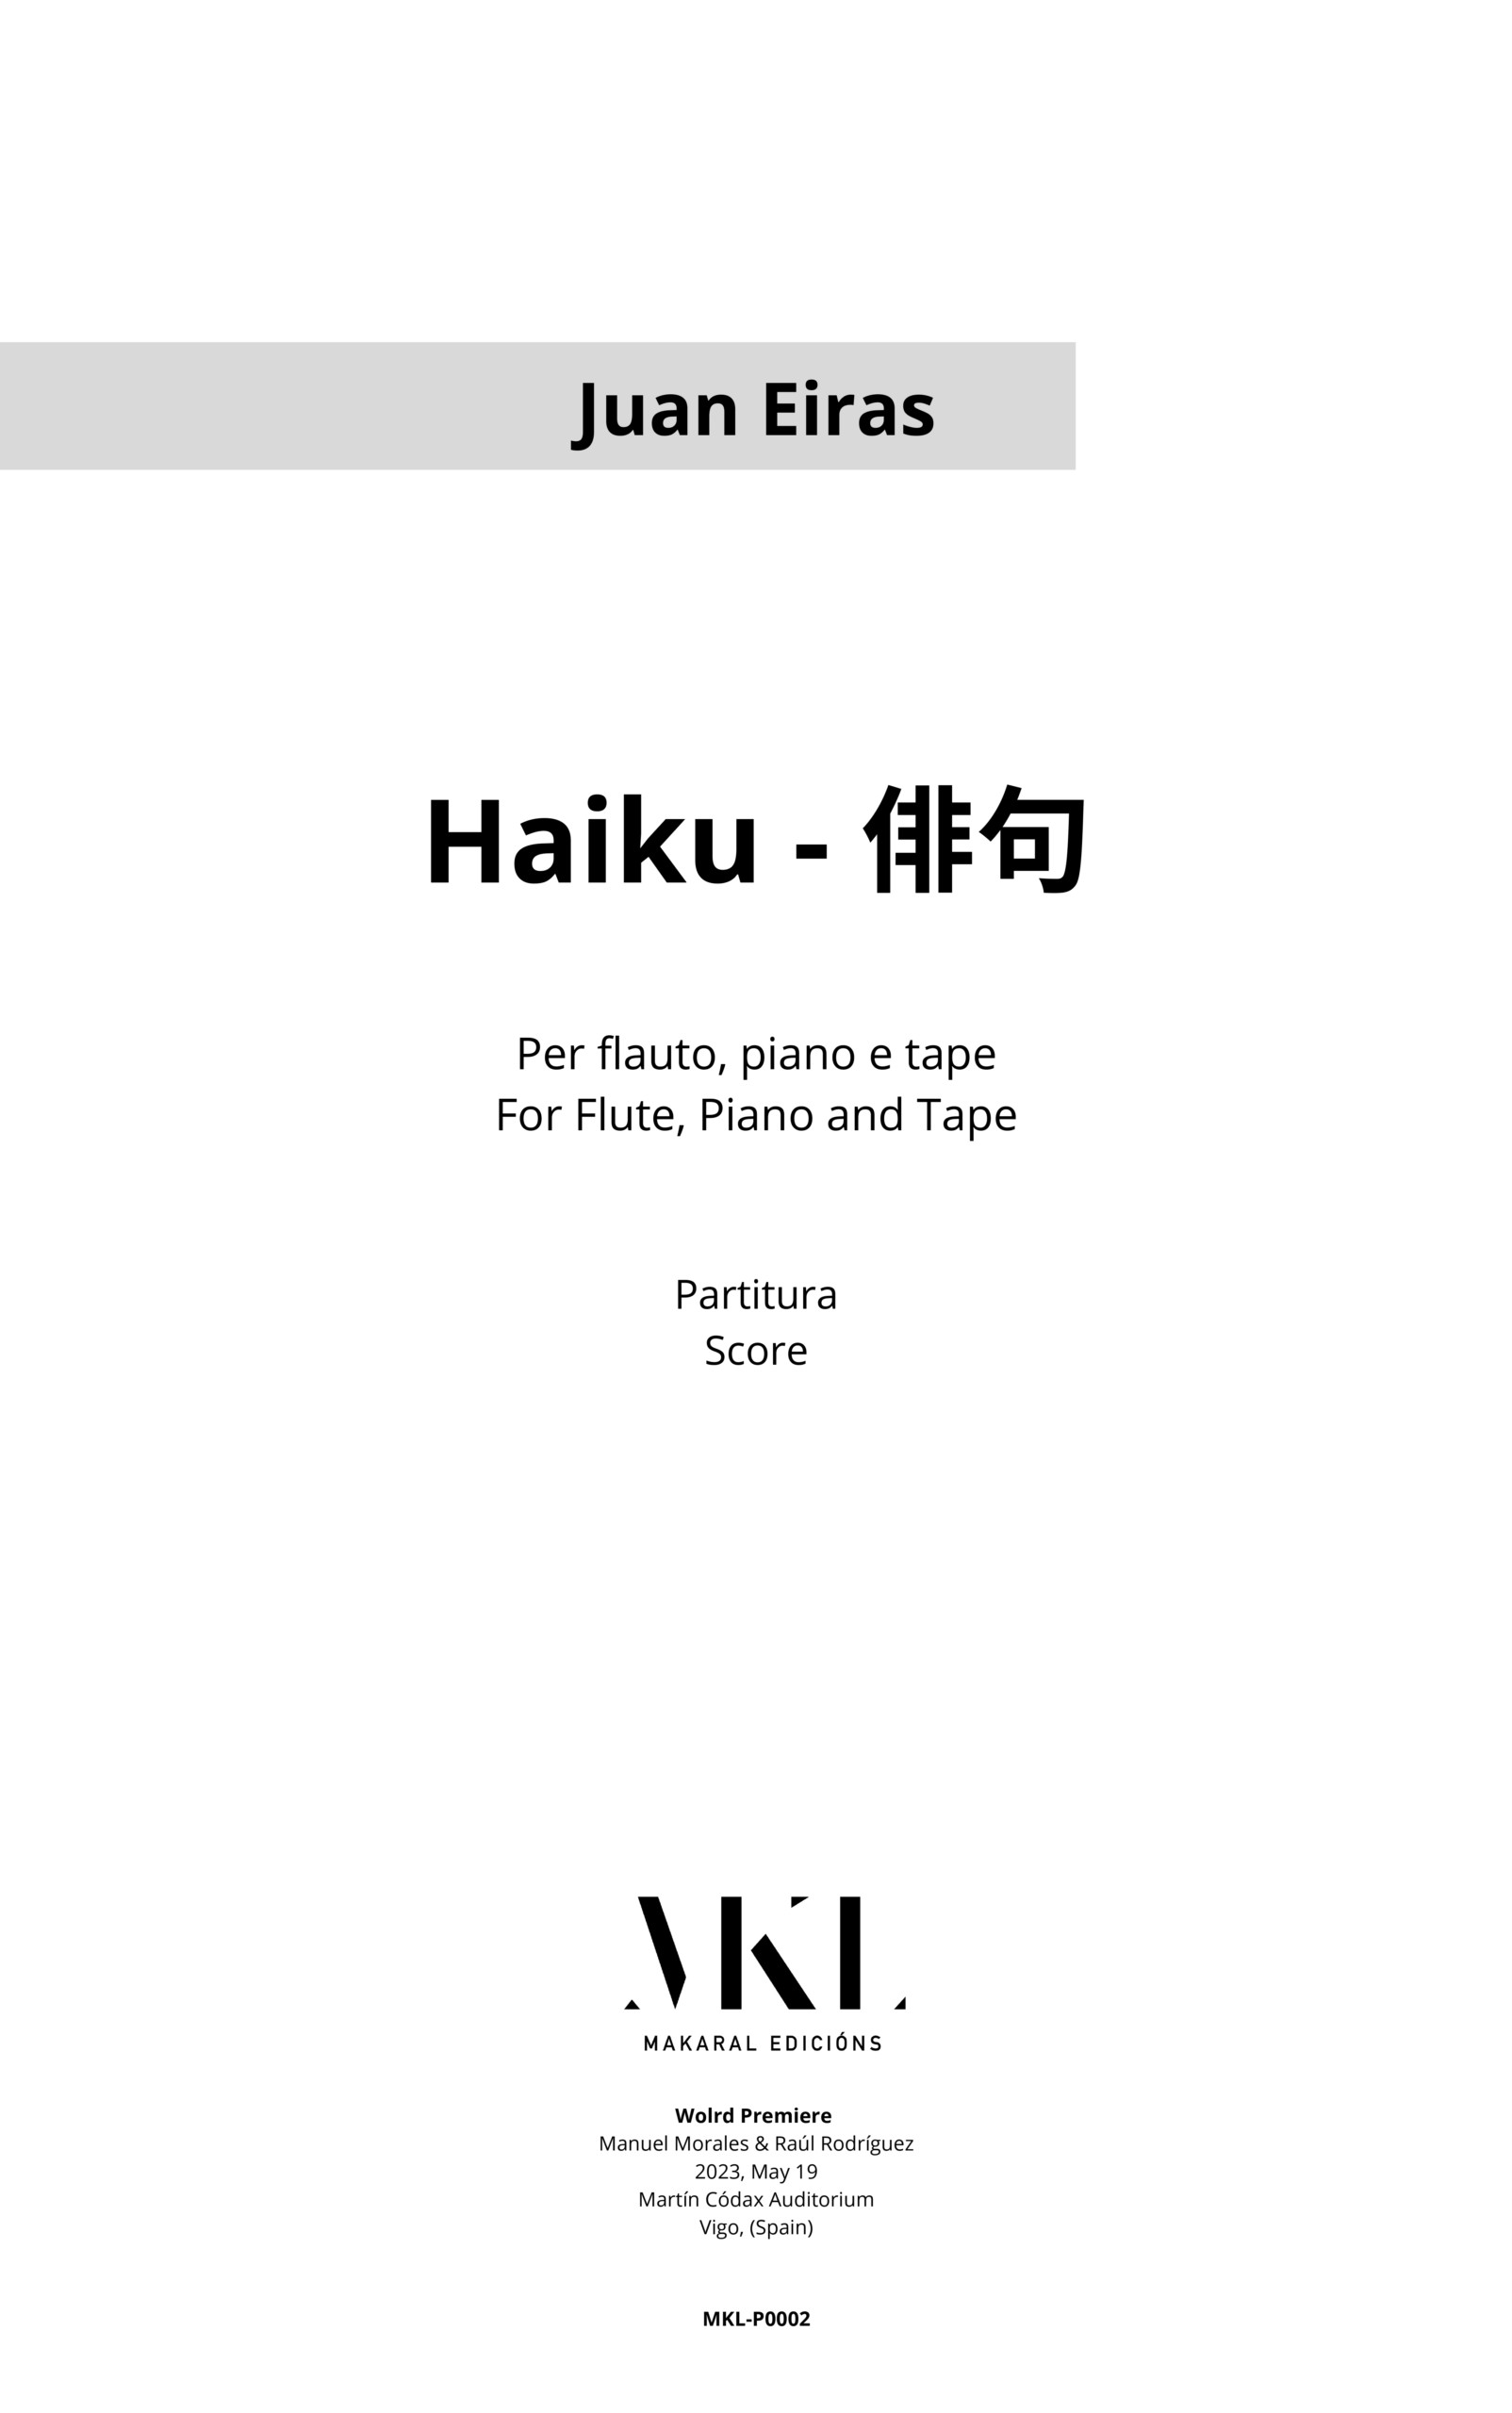 <p translate="no">Haiku - 俳句<p>